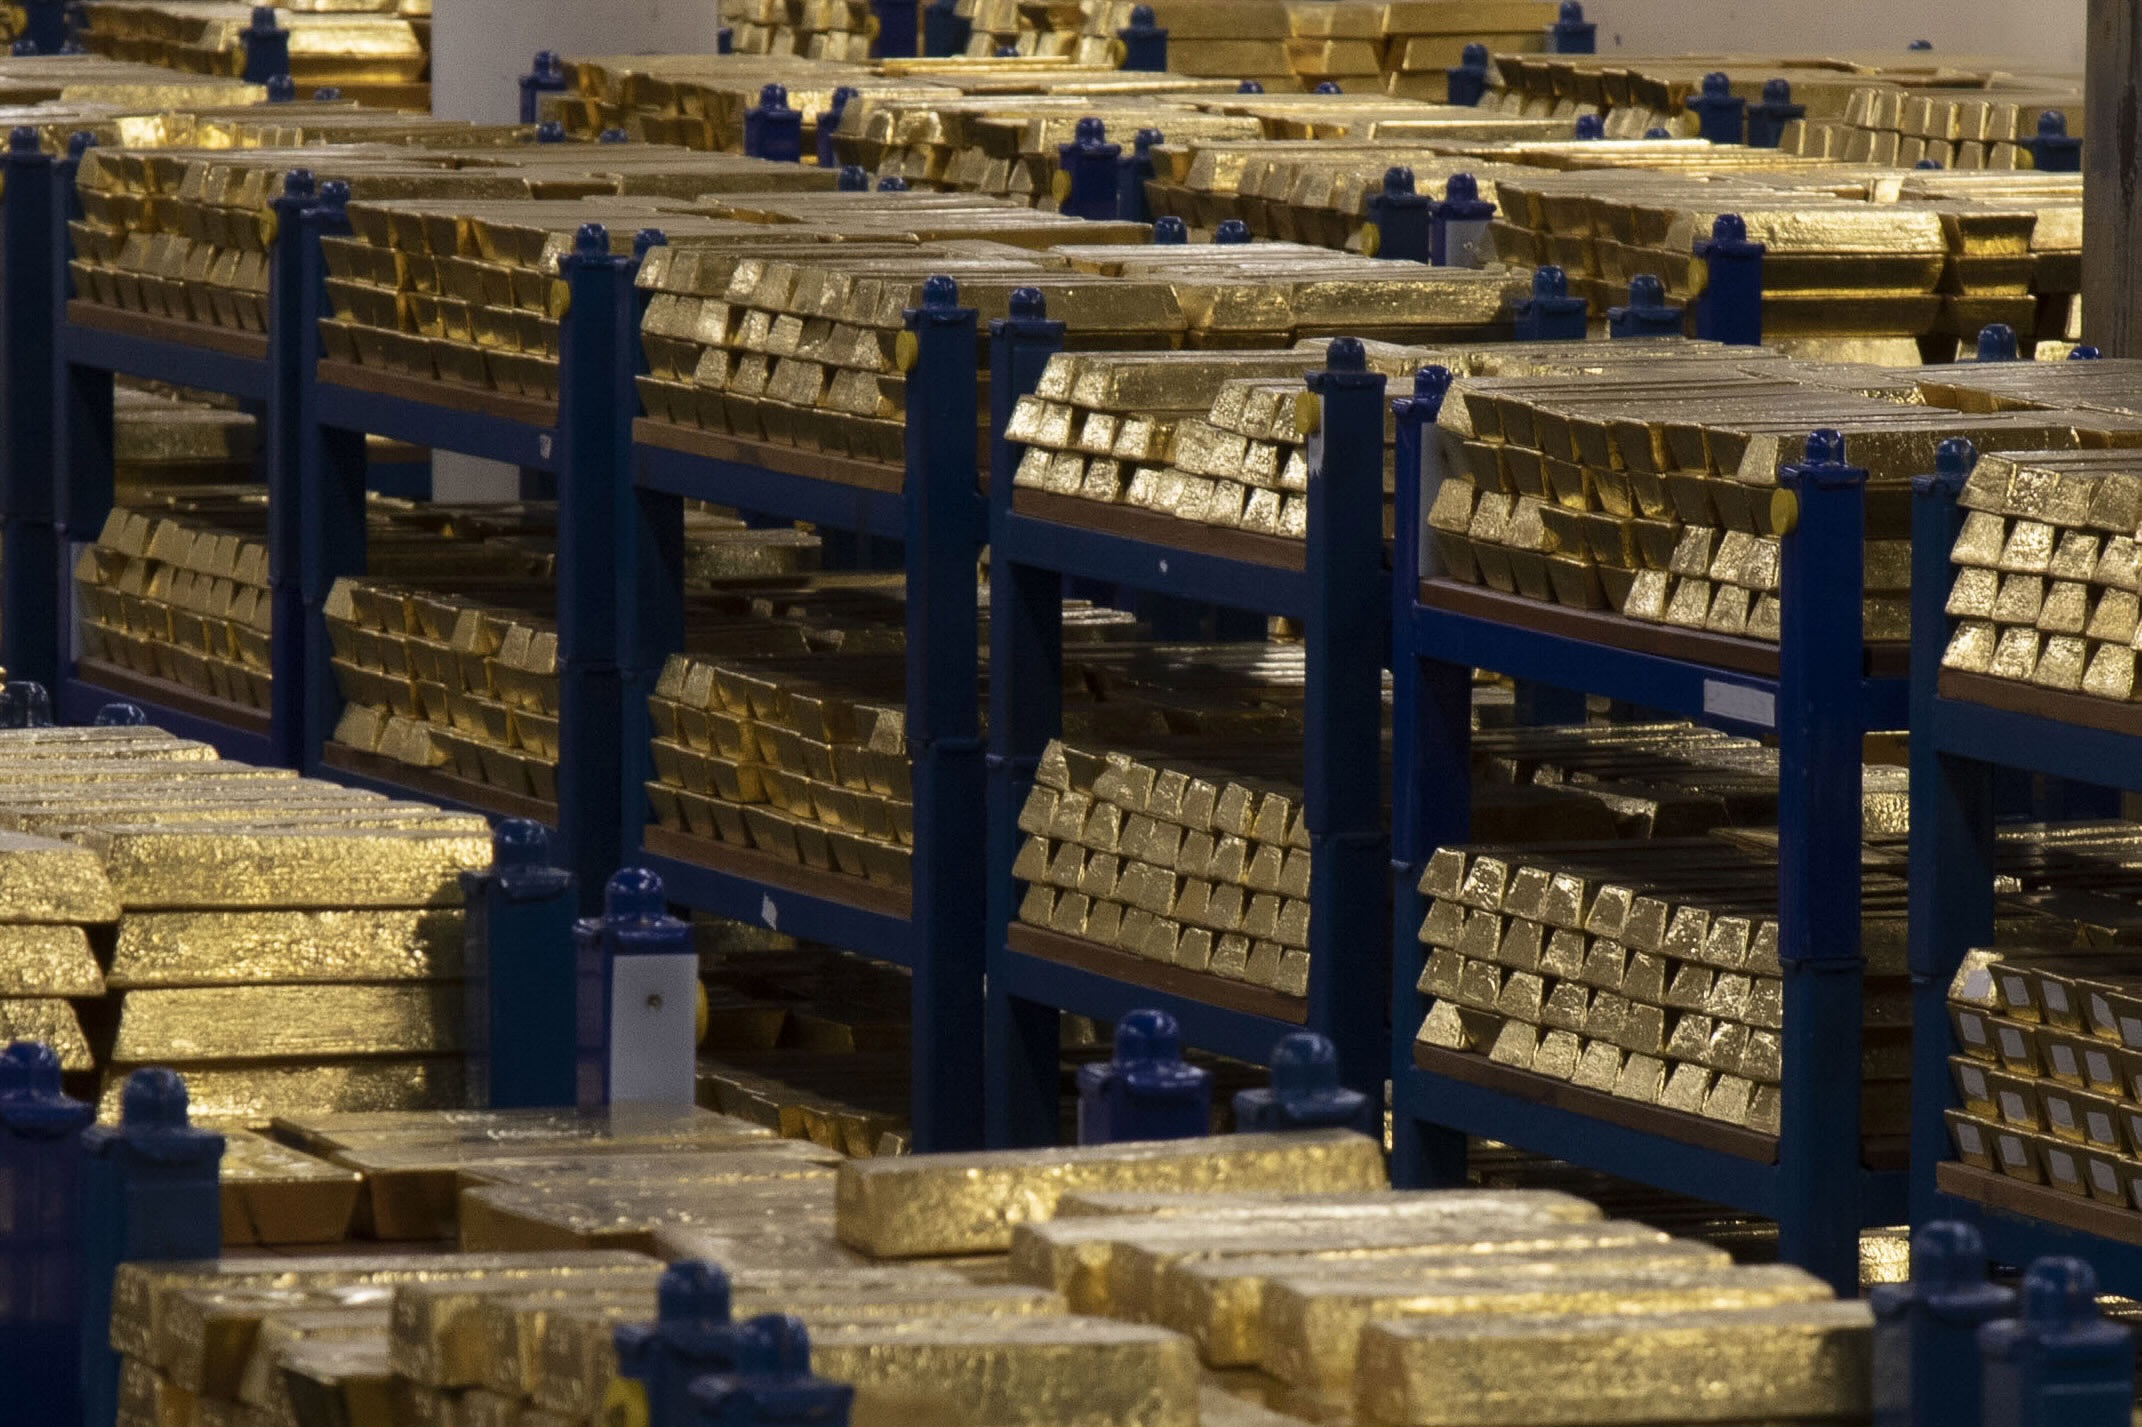 Bank of England gold vaults